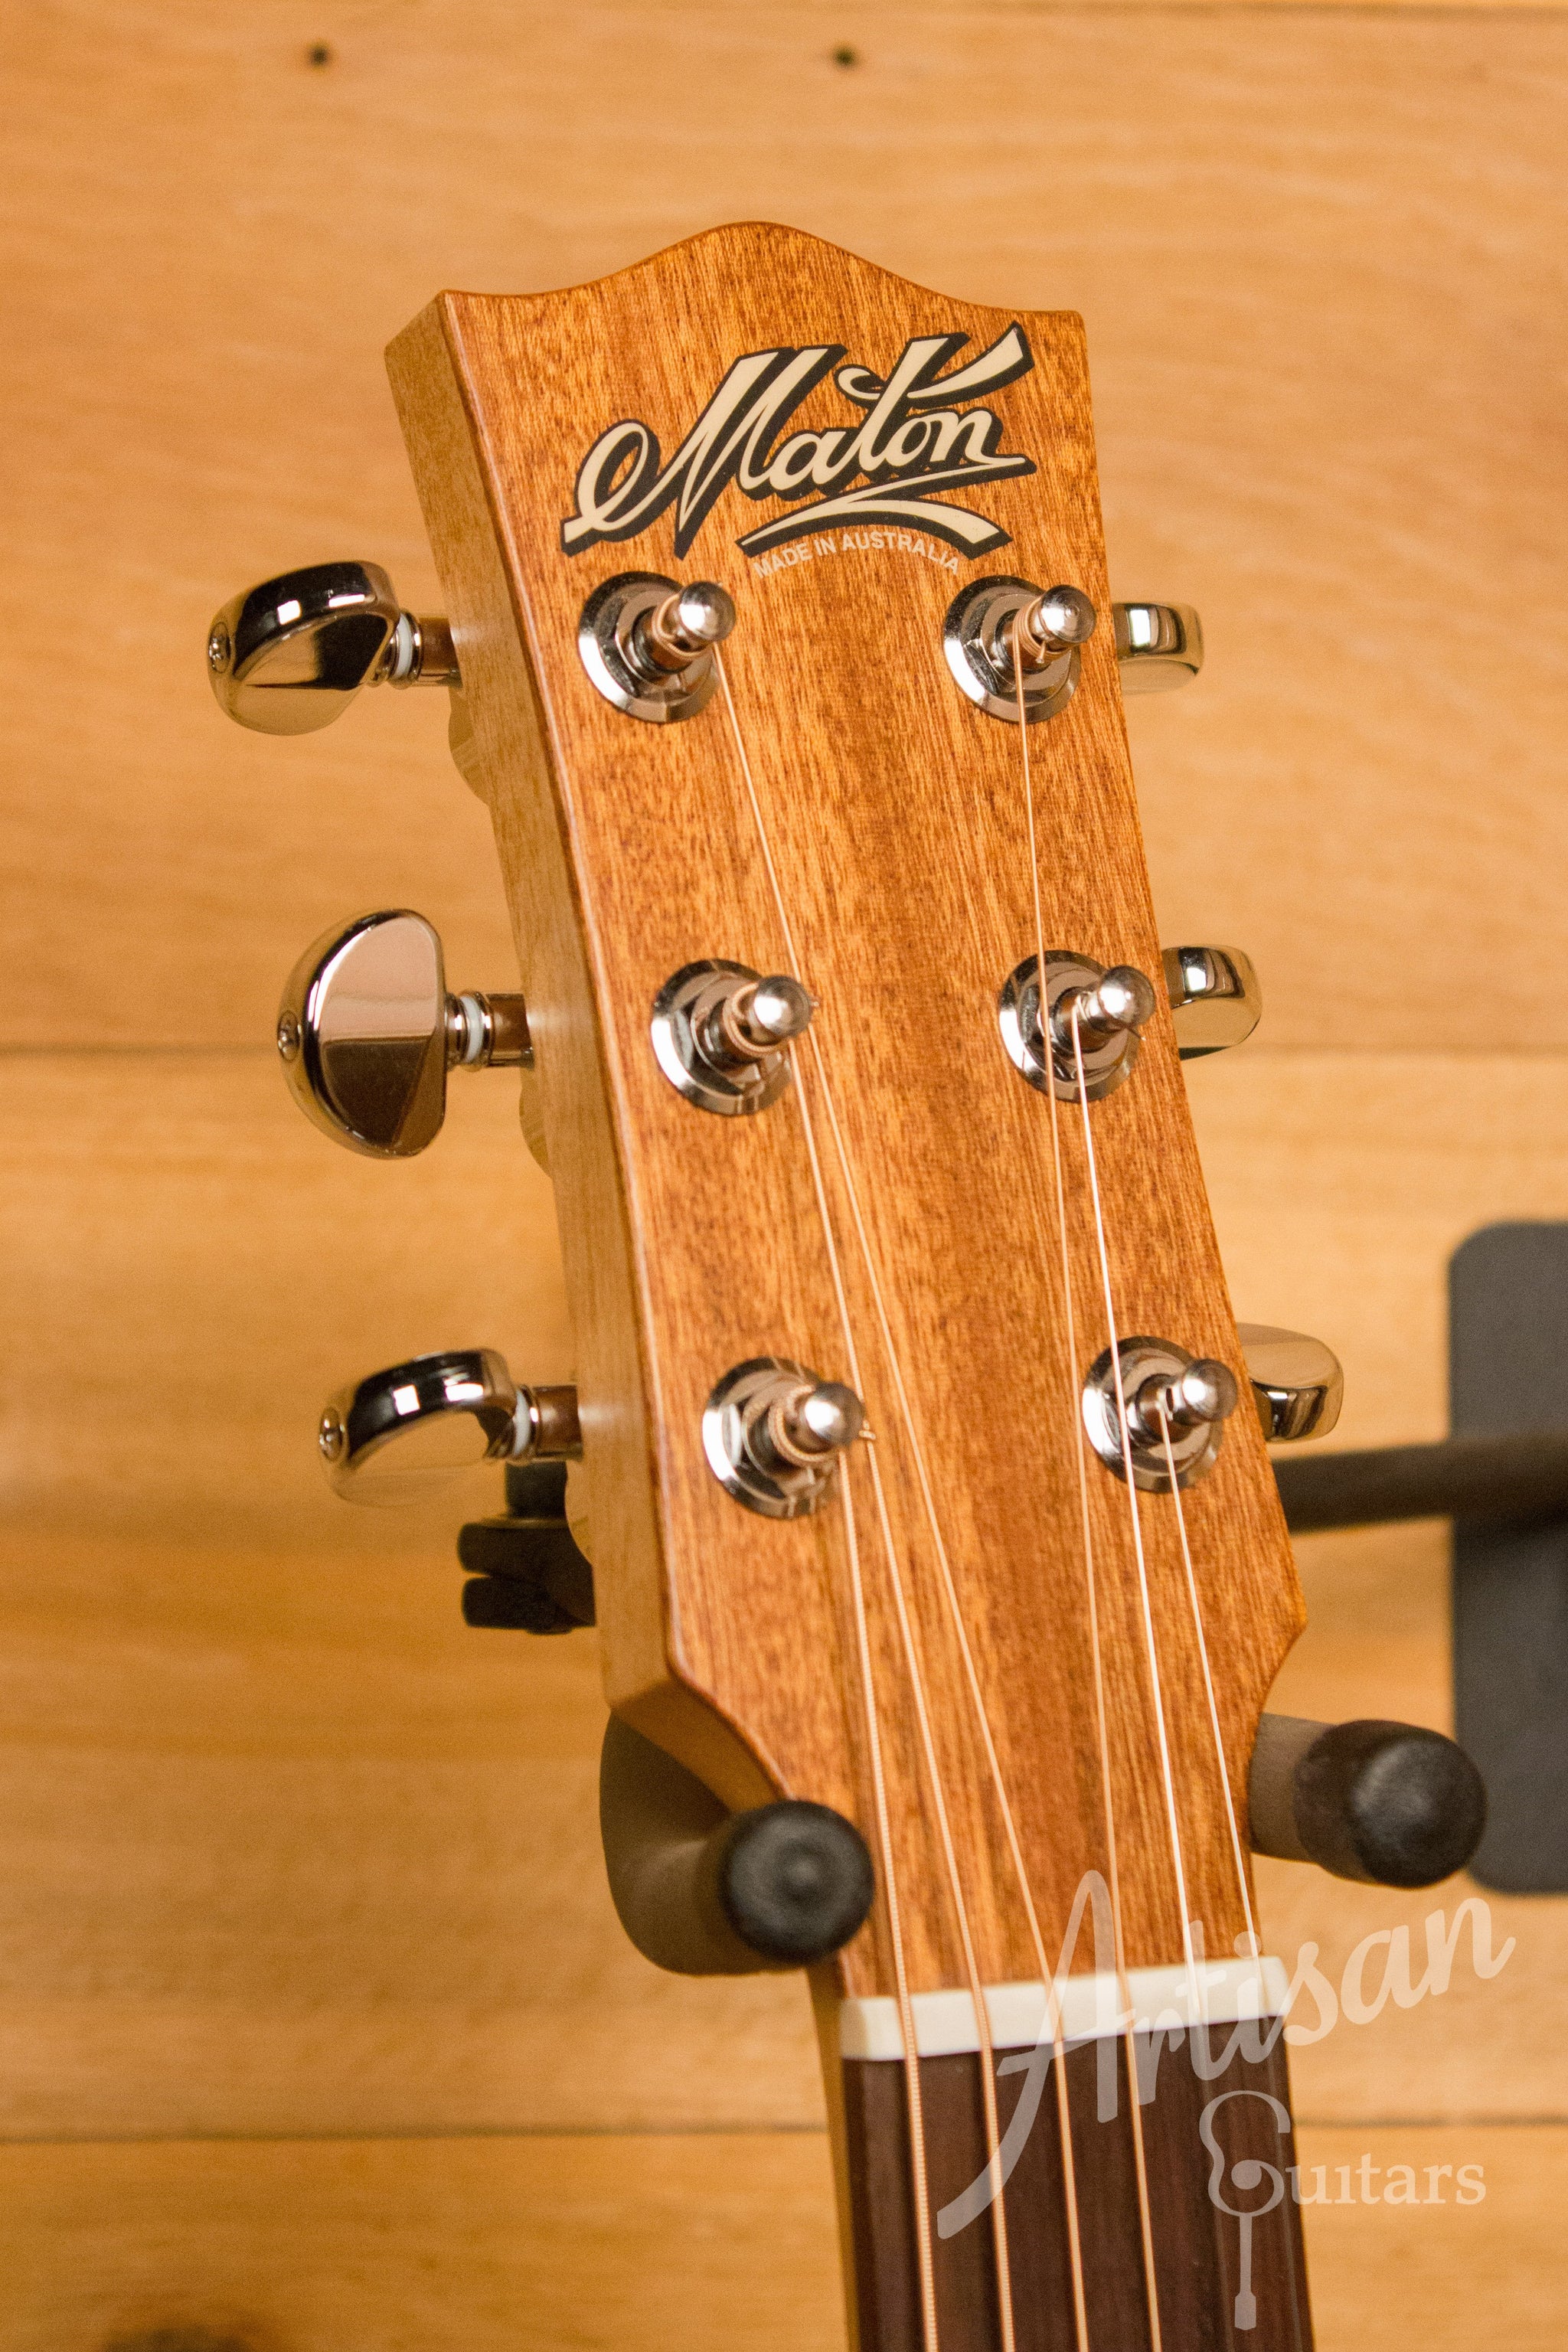 Maton EBG808CLG Performer Series Bunya and Queensland Maple with Cutaway ID-11298 - Artisan Guitars